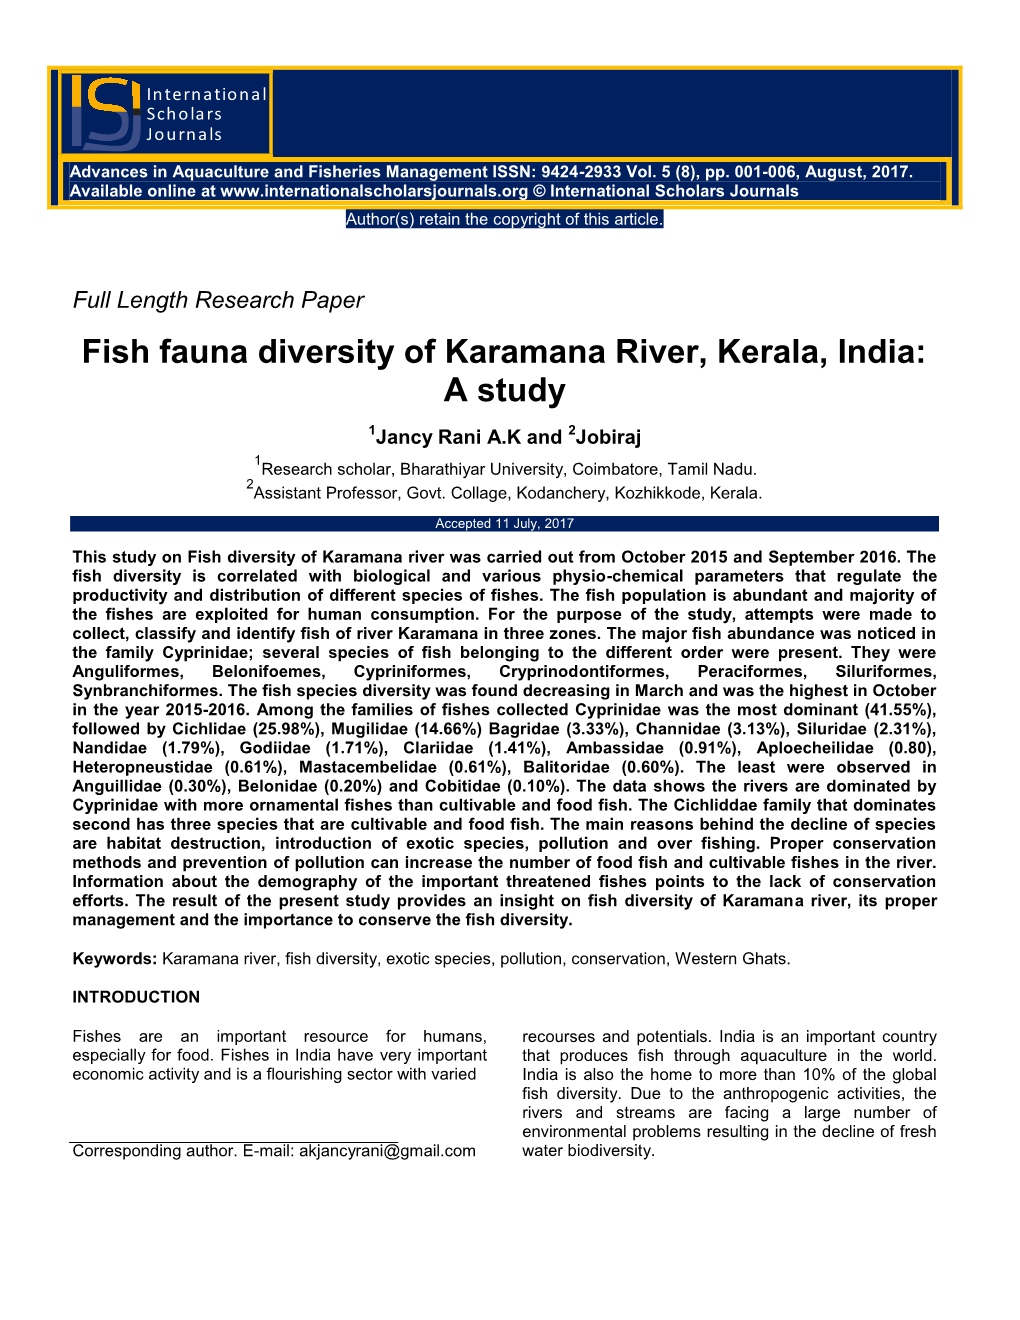 Fish Fauna Diversity of Karamana River, Kerala, India: a Study